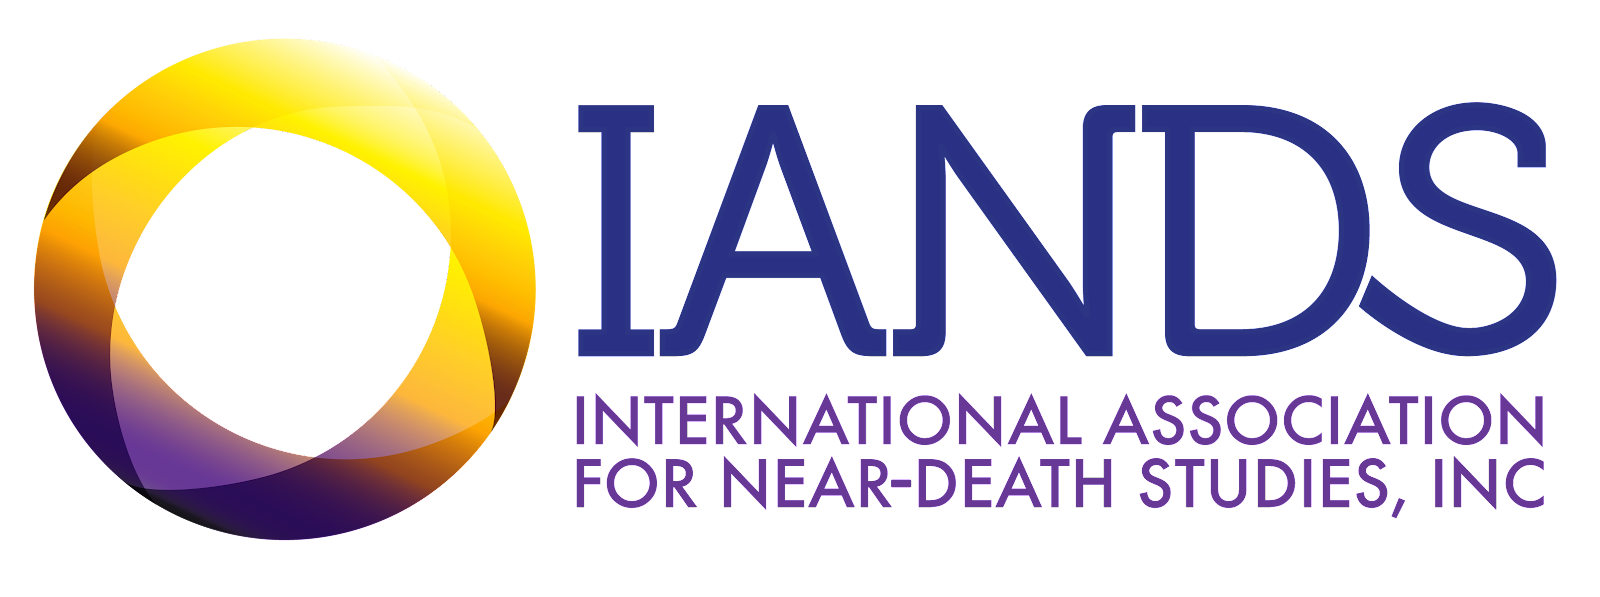 The International Association for Near-Death Studies